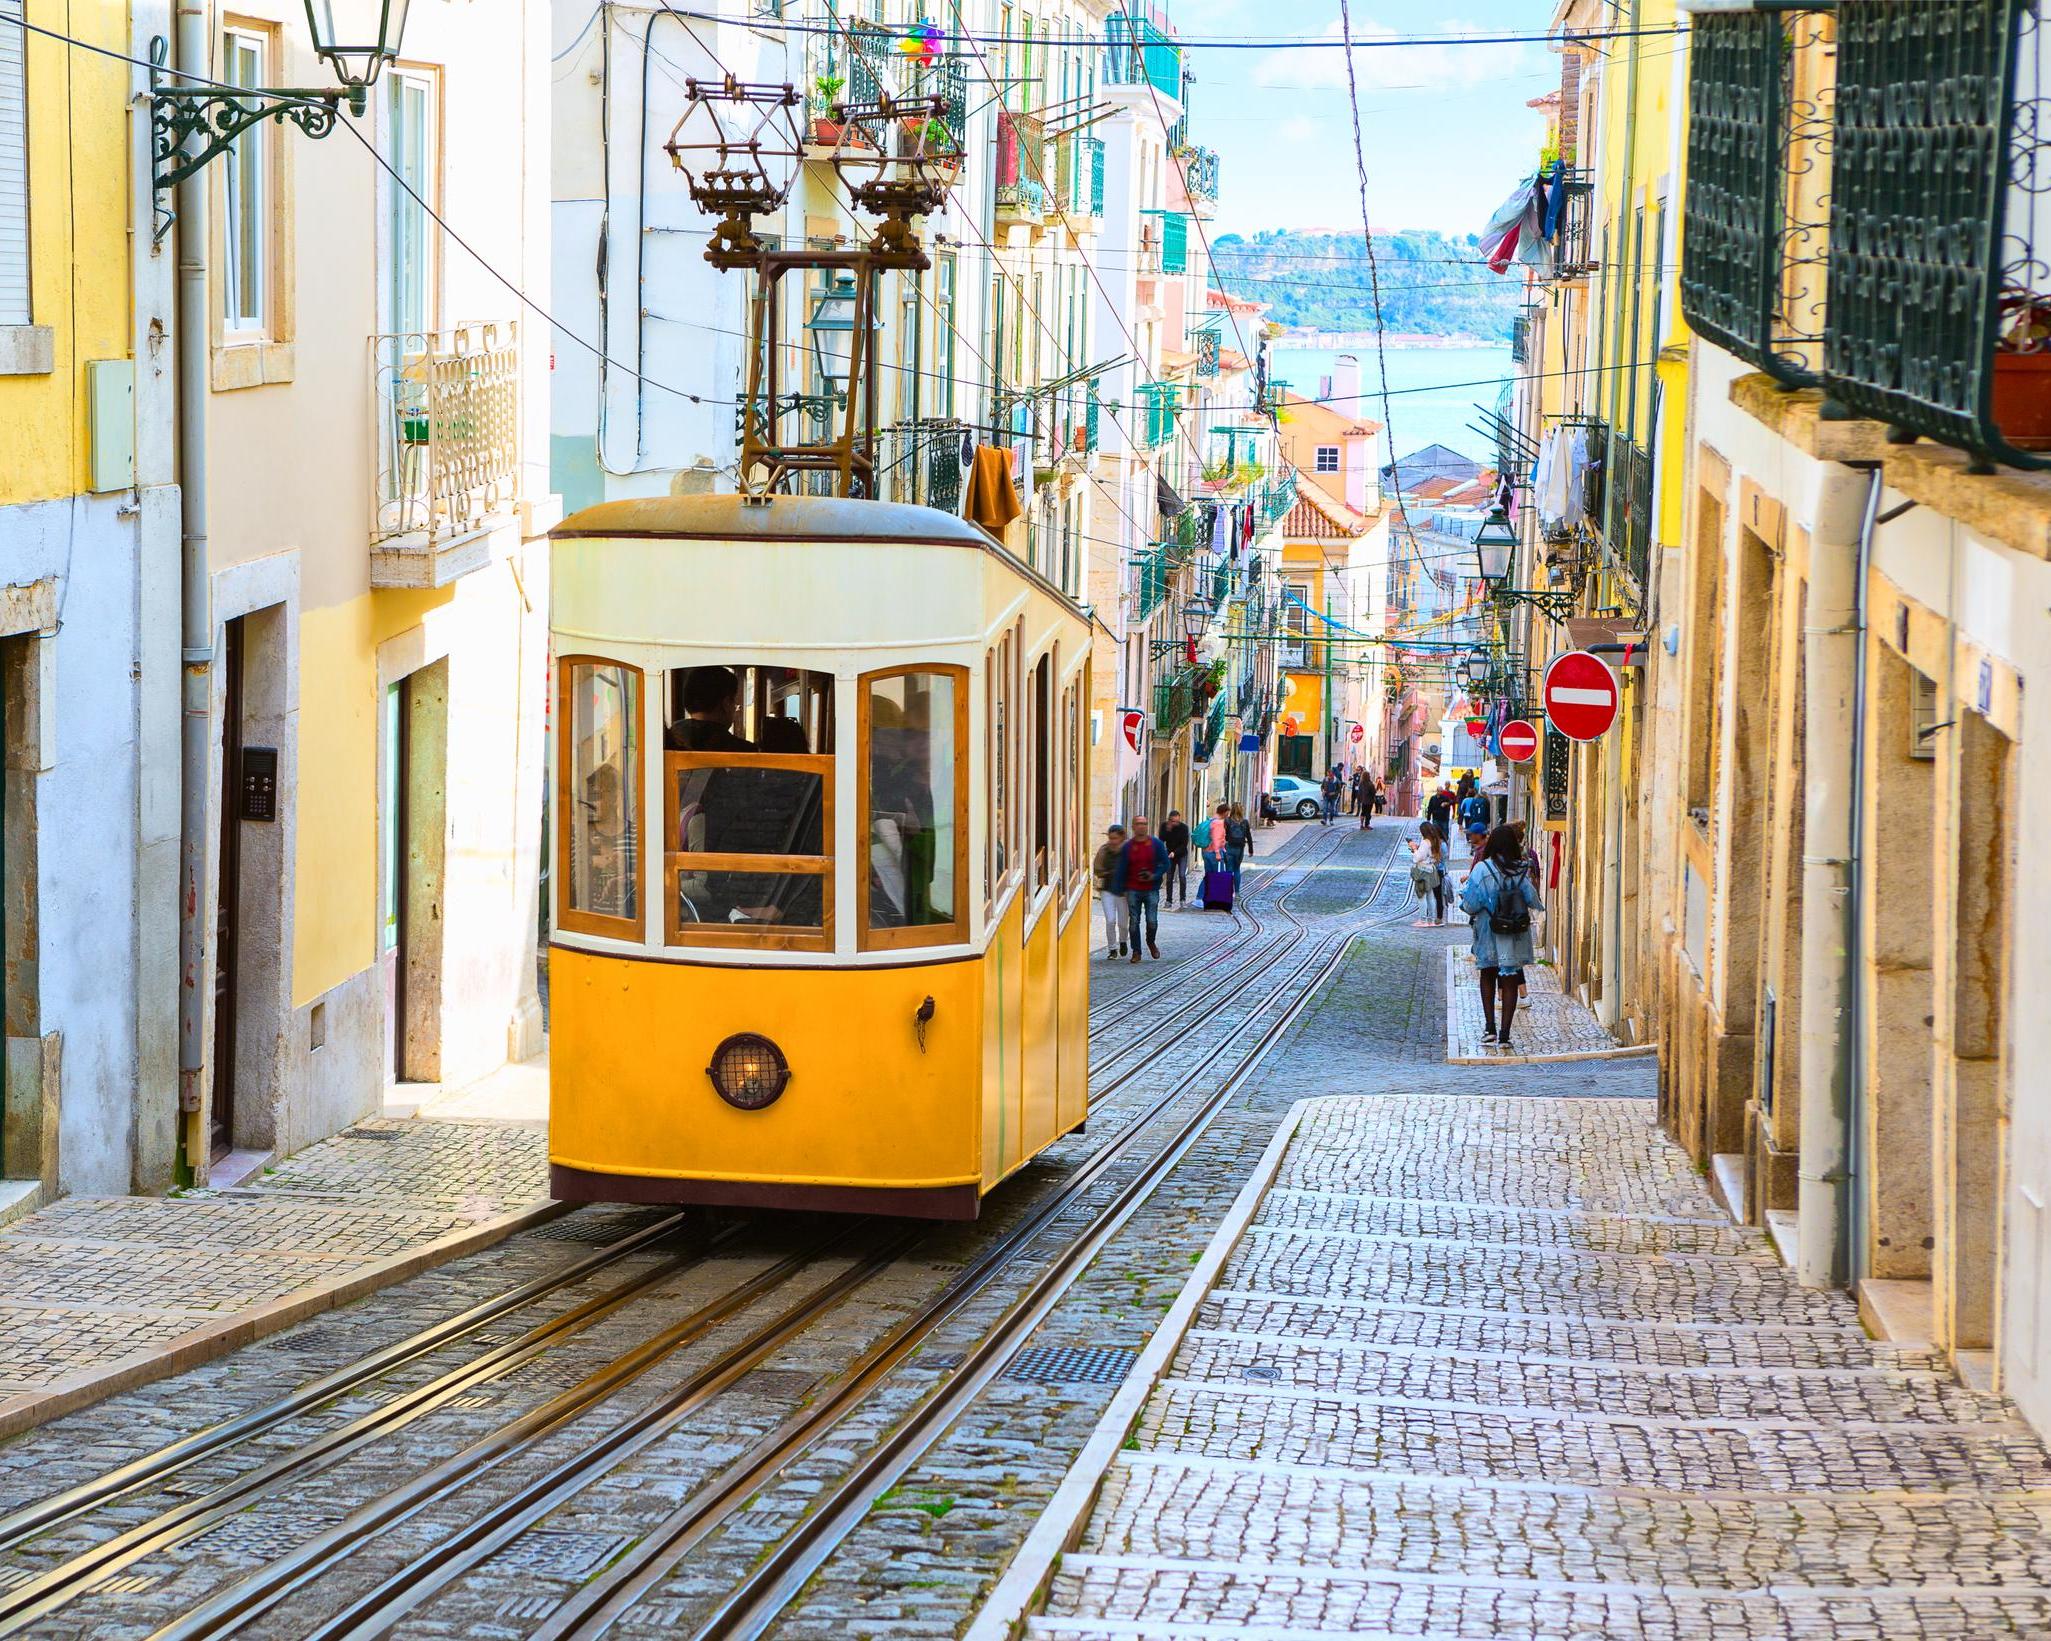 Viaje combinado a Lisboa y Madeira. 7 días por Portugal